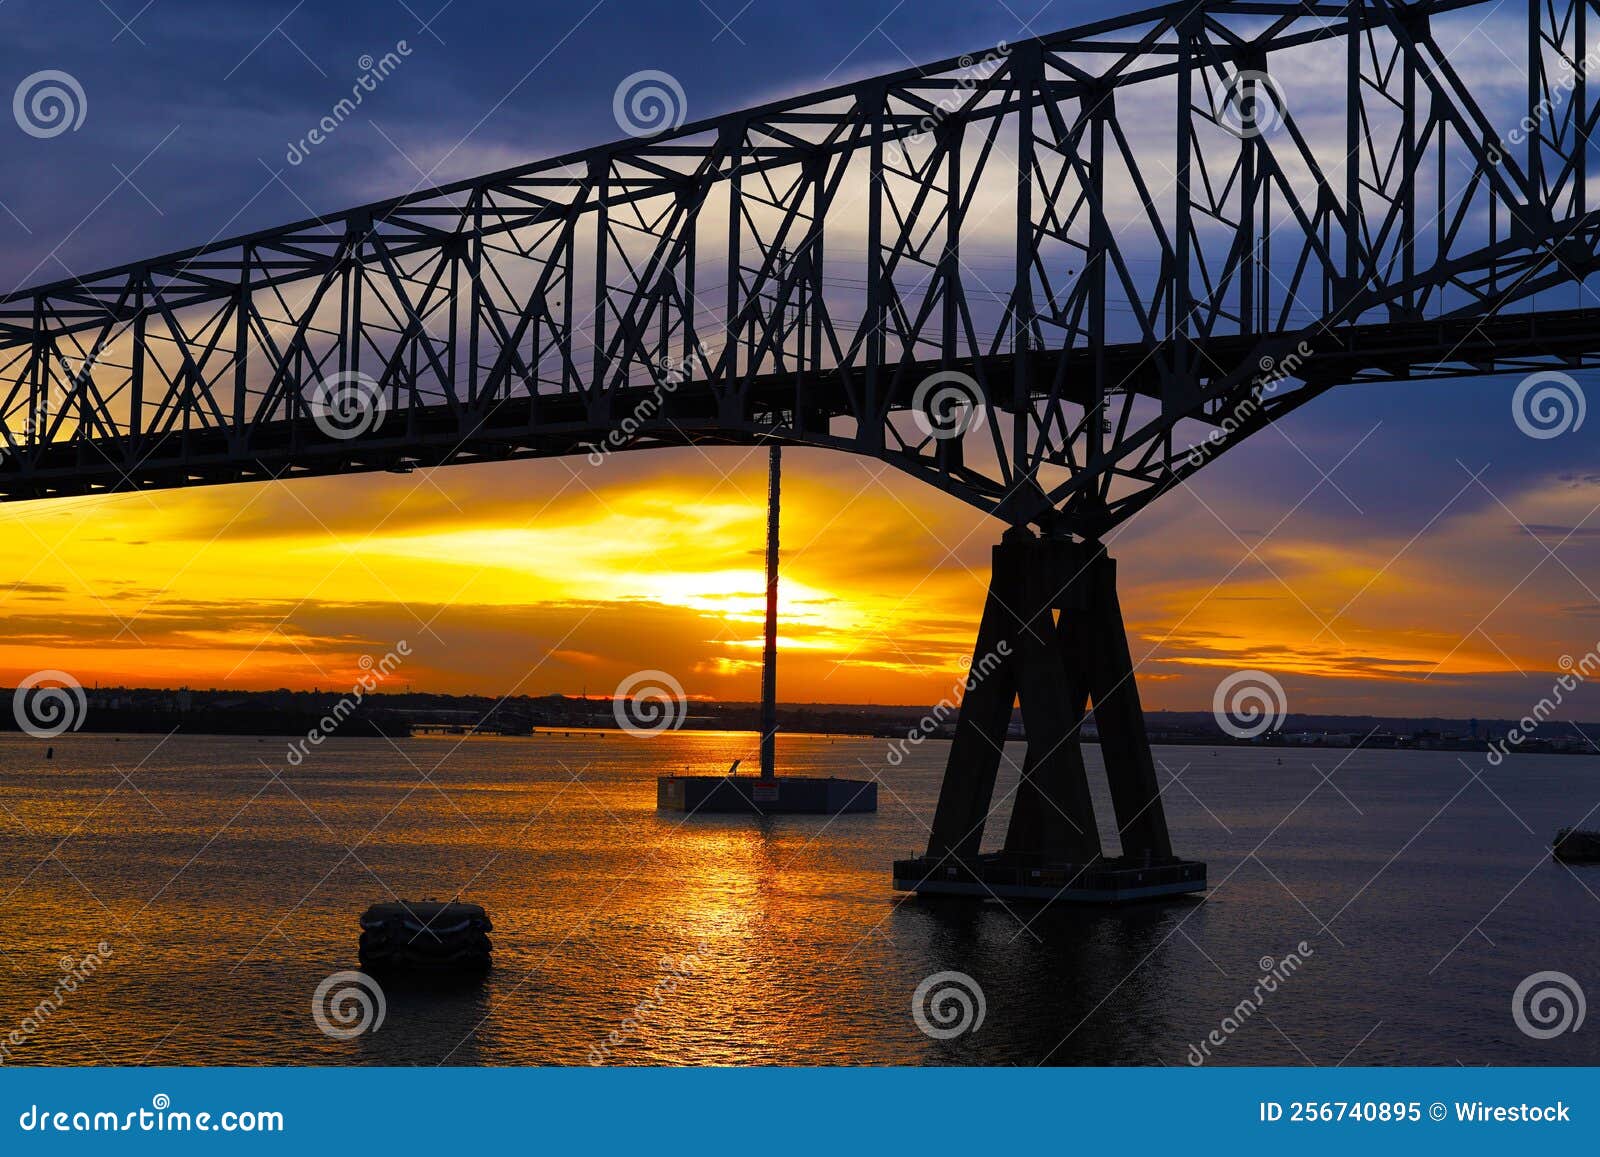 francis scott key bridge at sunset, us